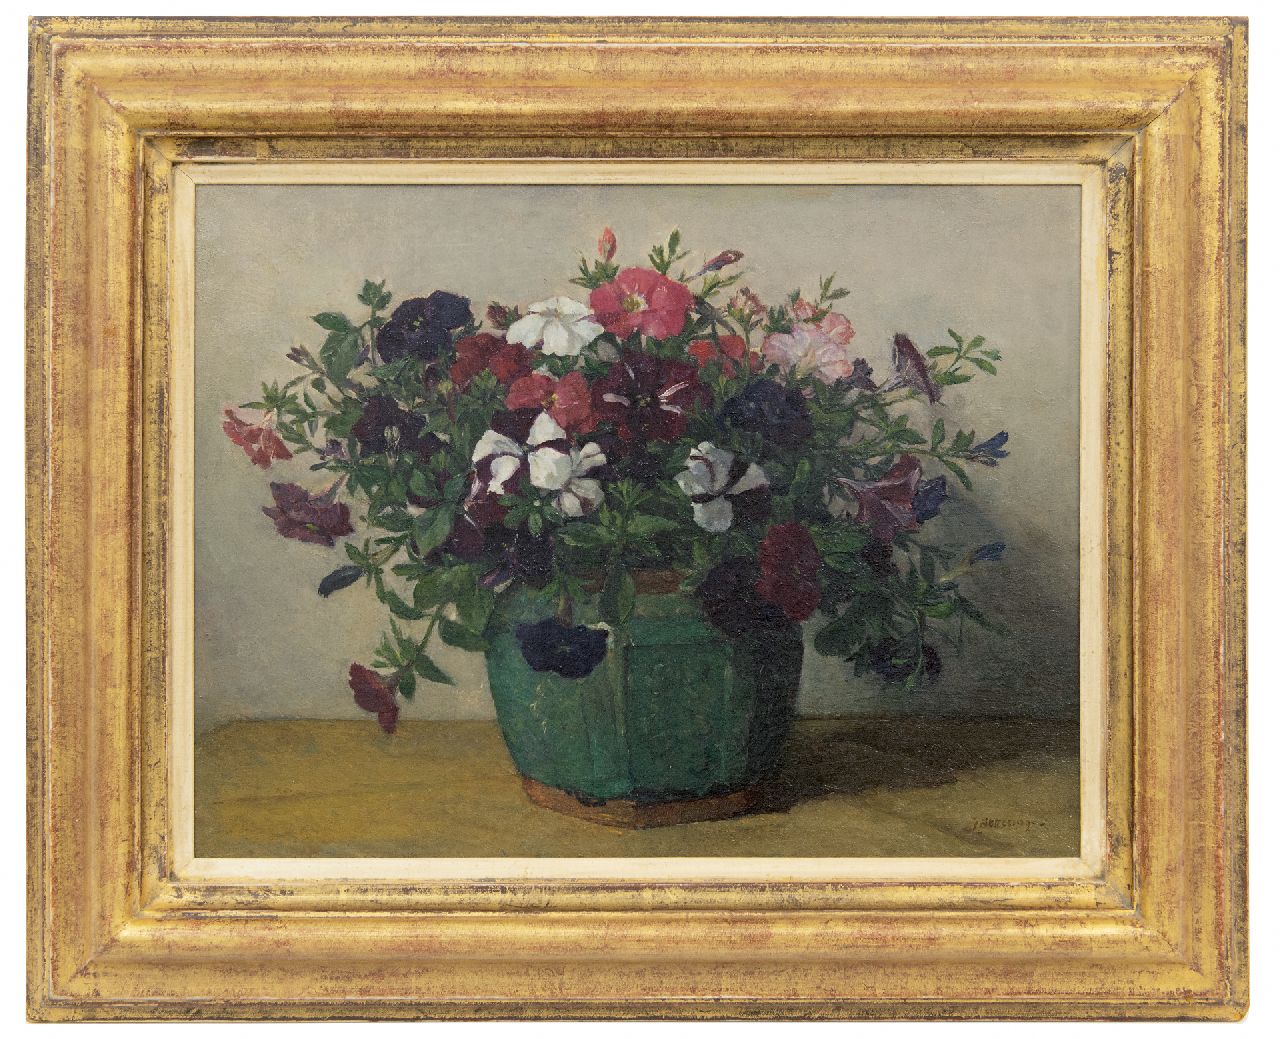 Akkeringa J.E.H.  | 'Johannes Evert' Hendrik Akkeringa | Paintings offered for sale | Petunias, oil on canvas 33.8 x 44.0 cm, signed l.r.